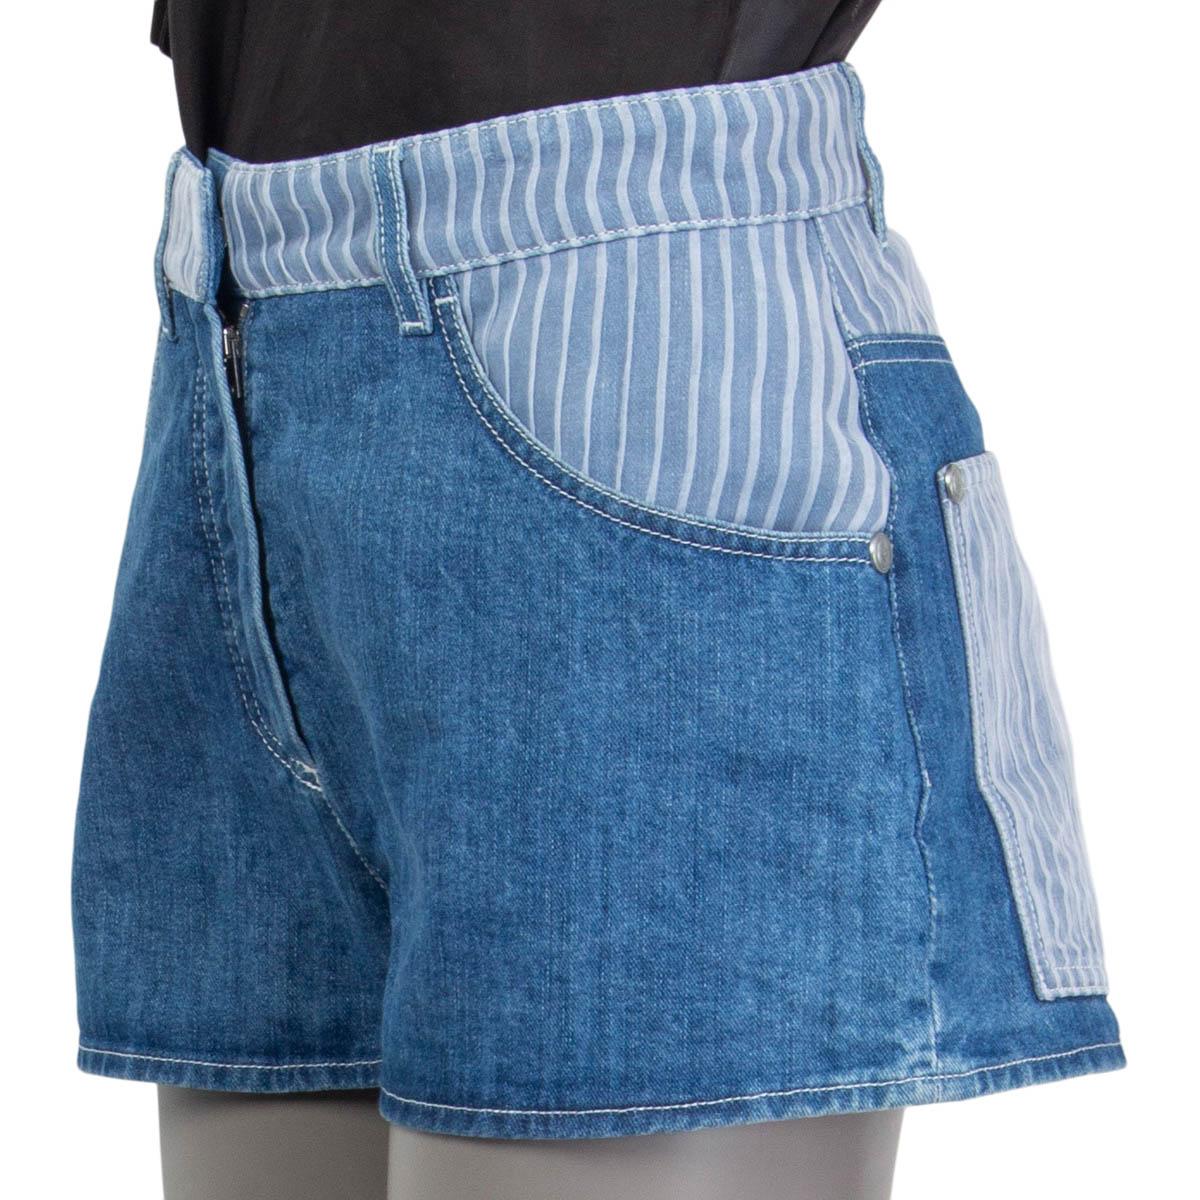 CHANLE Indigoblaue Baumwolle 2014 STRIPED DENIM HOT PANTS Shorts 36 XS Damen im Angebot